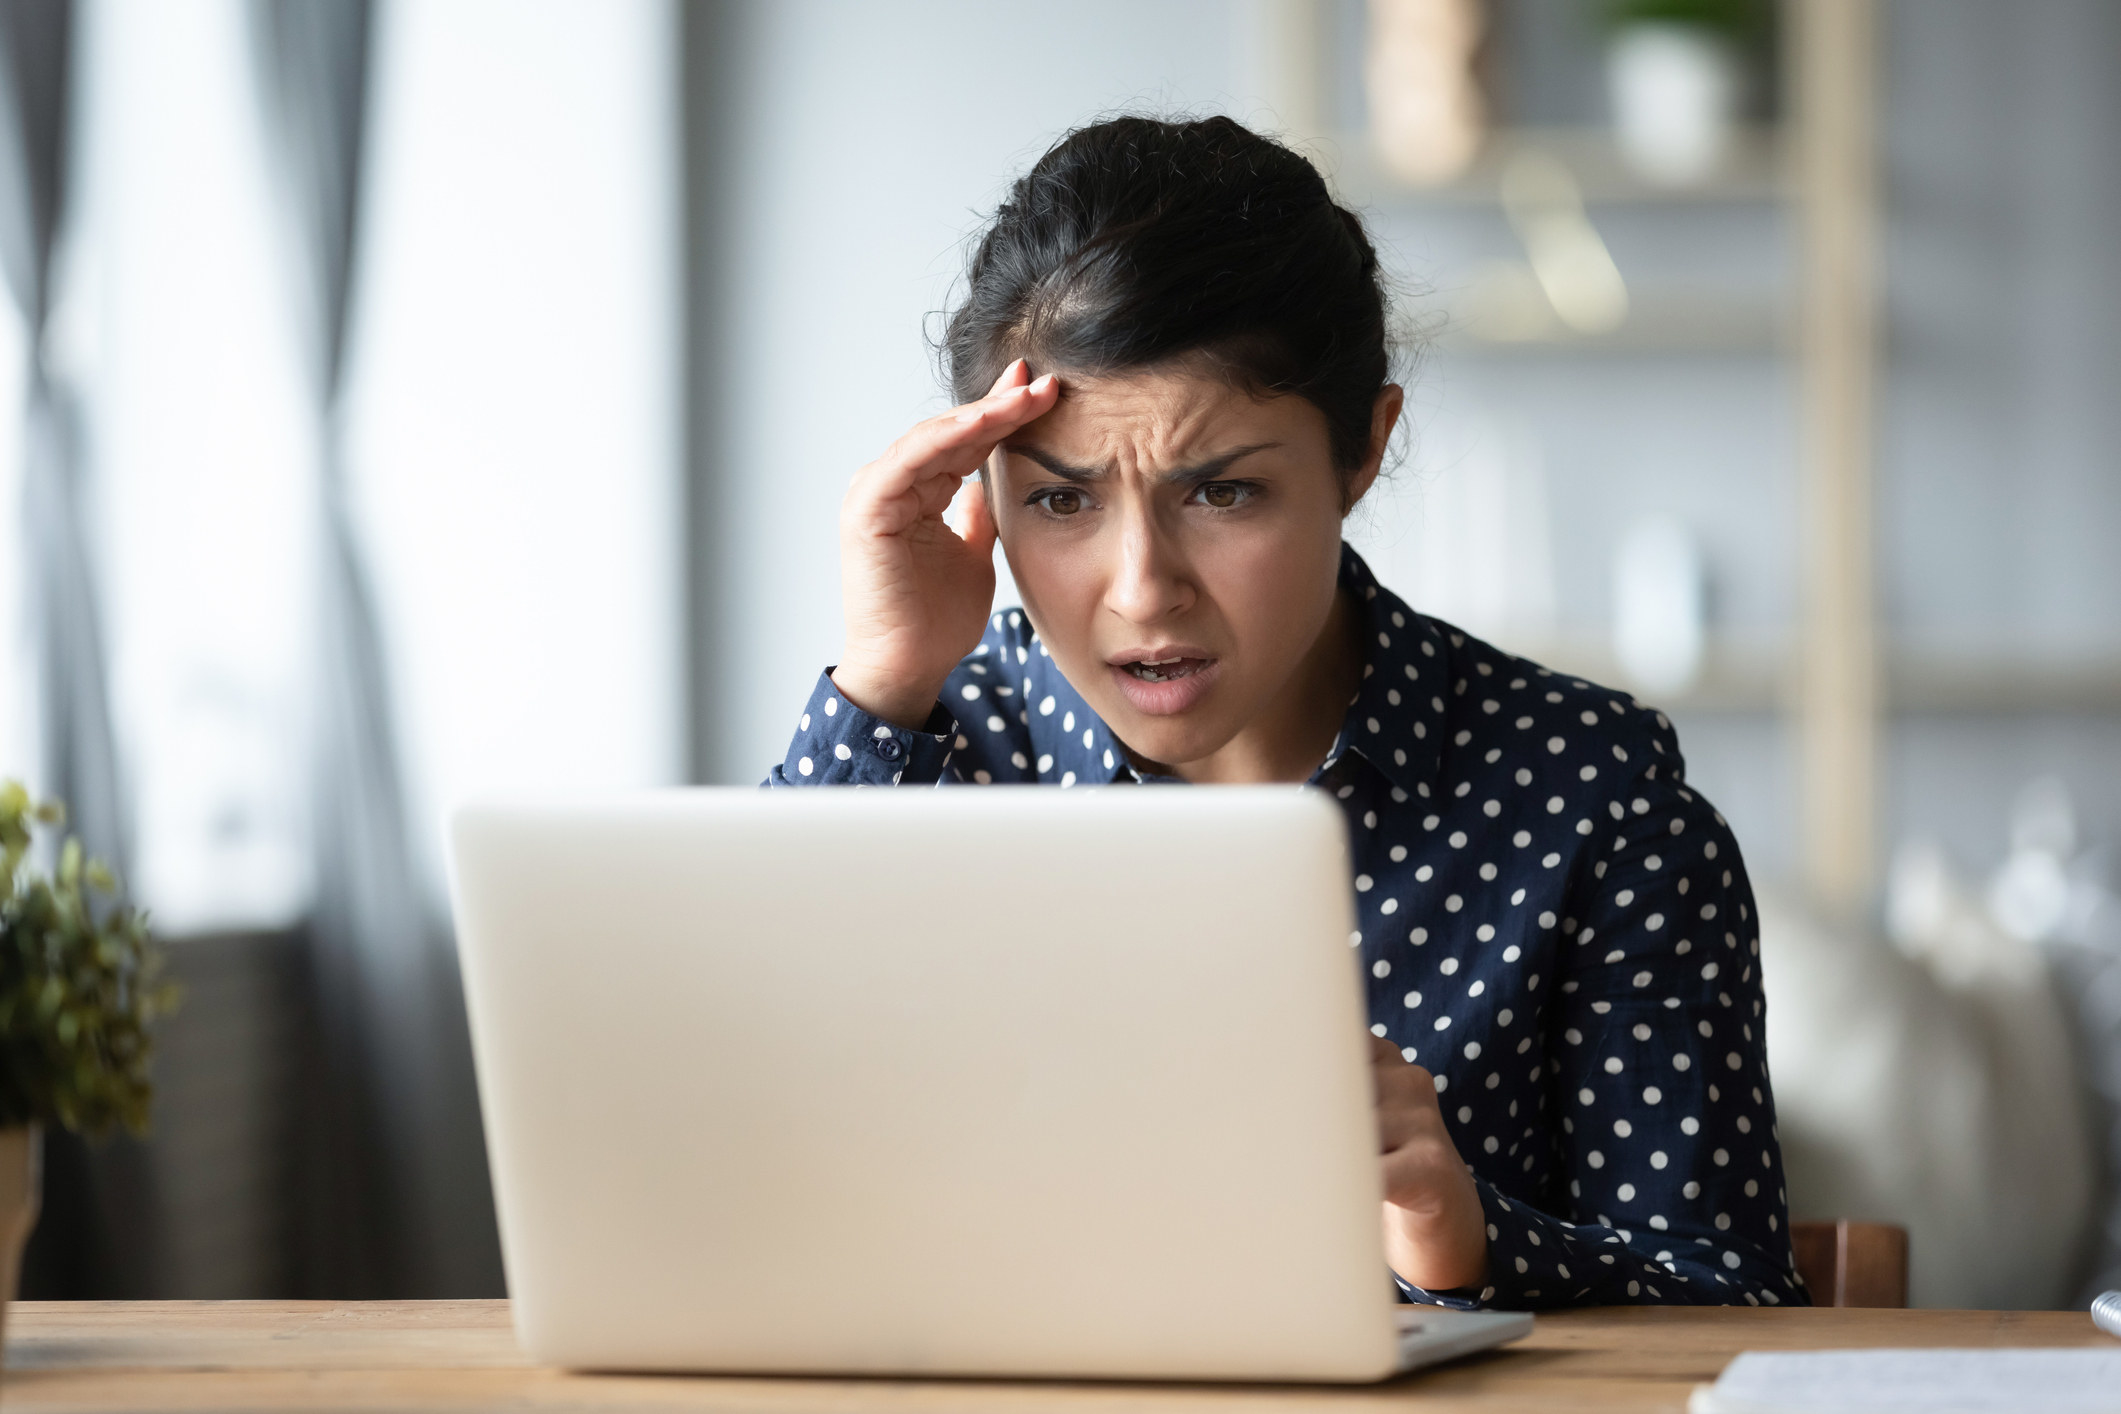 A woman shocked staring at a computer